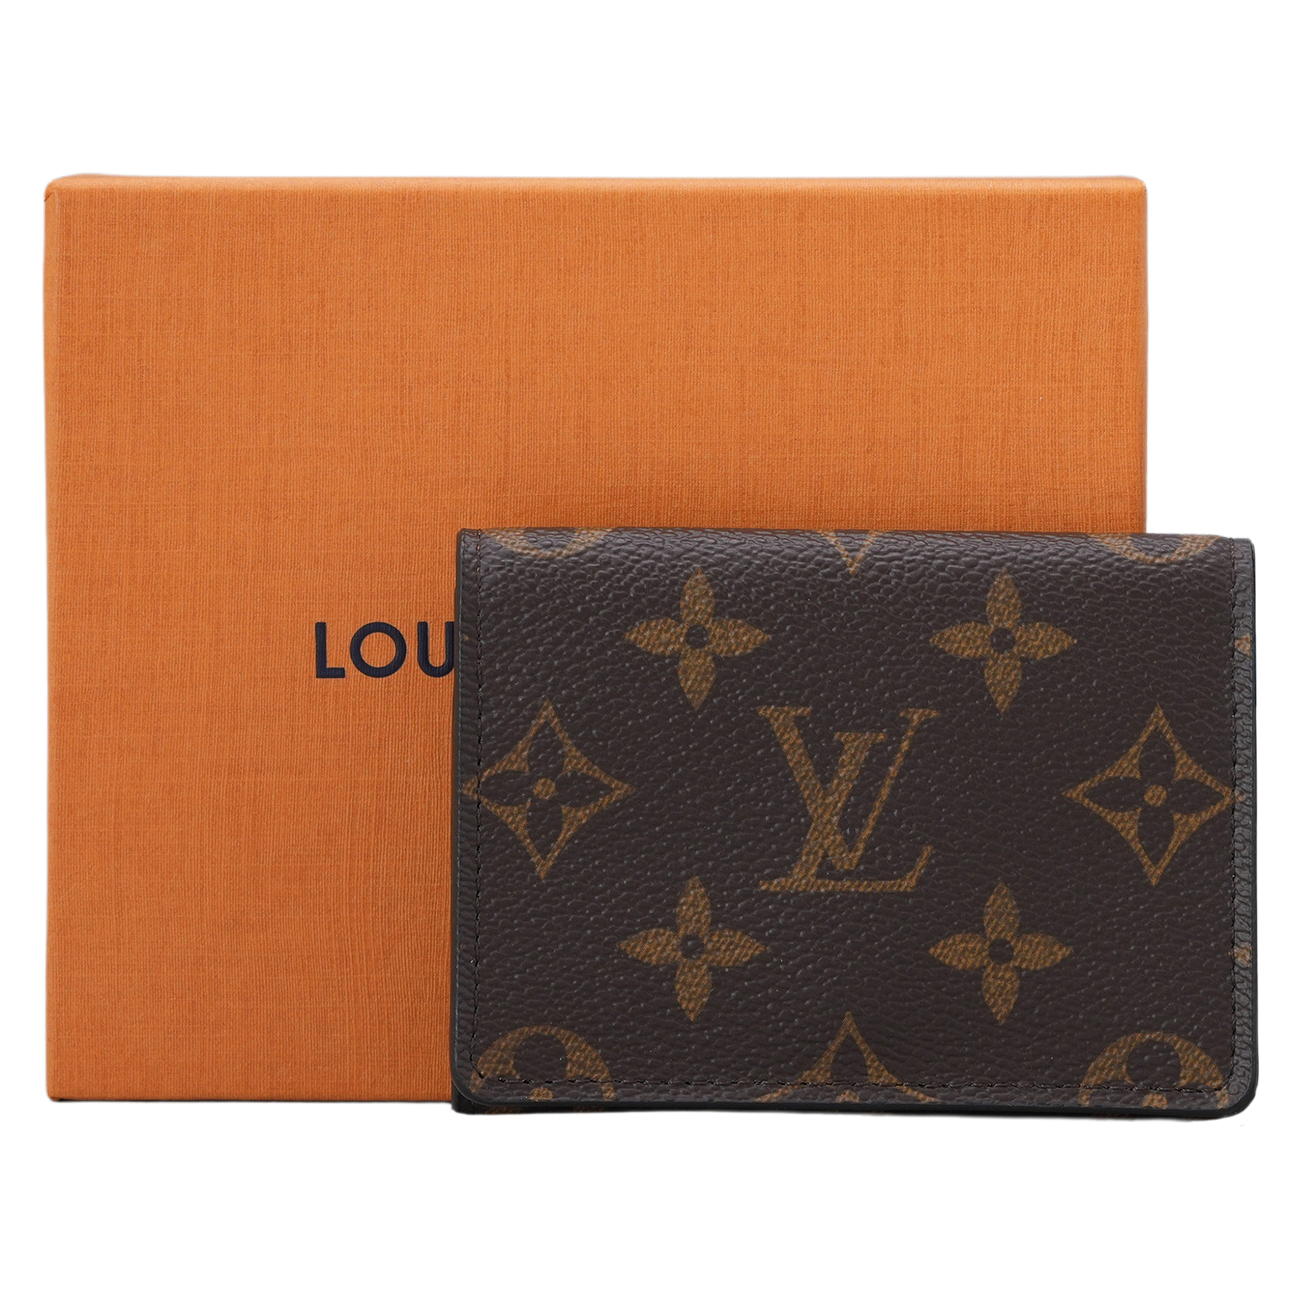 LOUIS VUITTON(USED)루이비통 M63801 모노그램 카드지갑